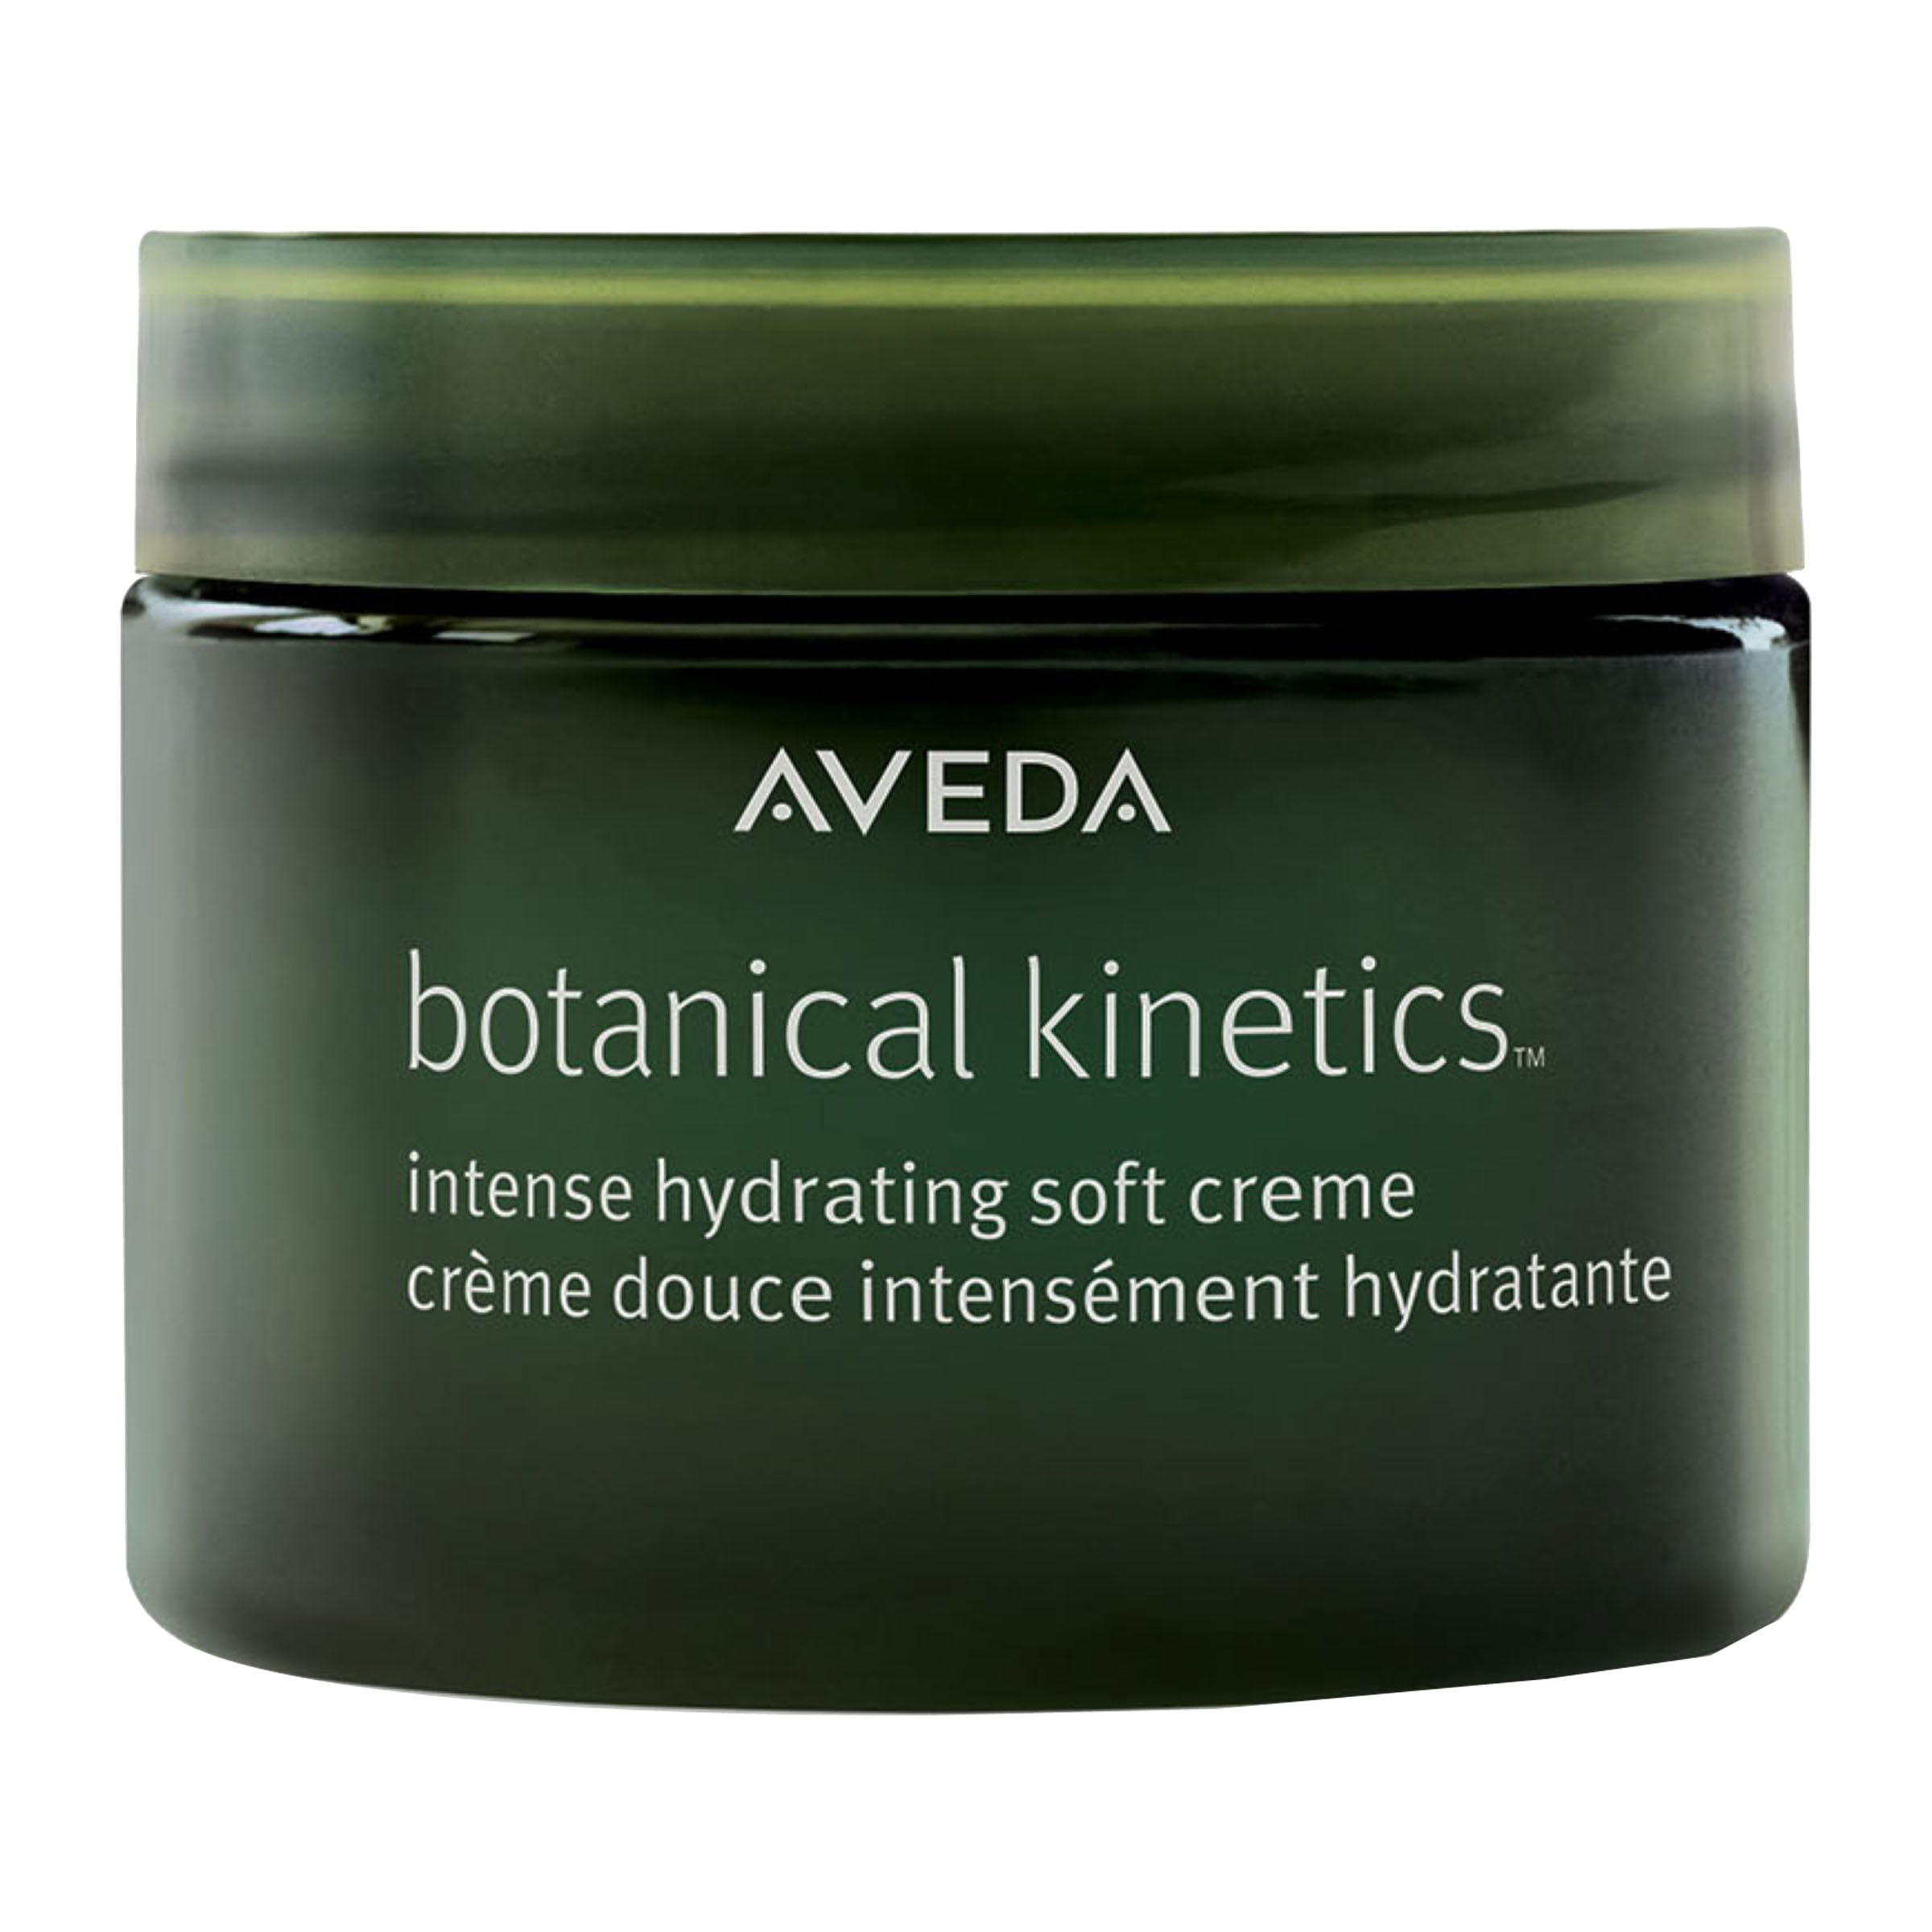 aveda botanical kinetics™ intense hydrating soft creme